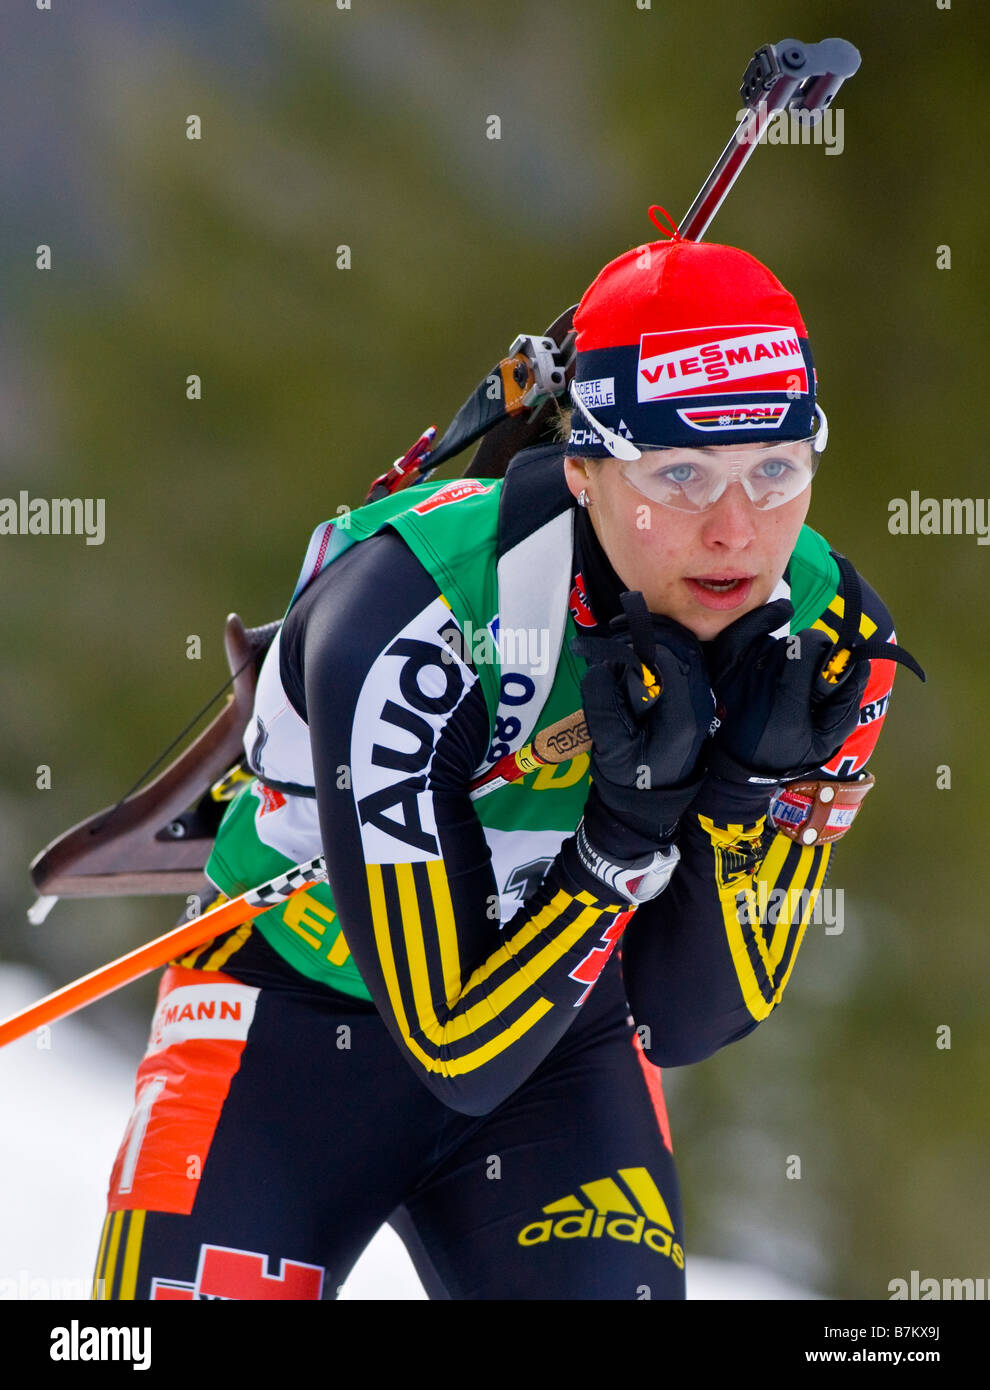 Magdalena Neuner Wallgau Weltcup Biathlon Verfolgung Frauen M nner Ruhpolding 18 1 2009 Foto Stock